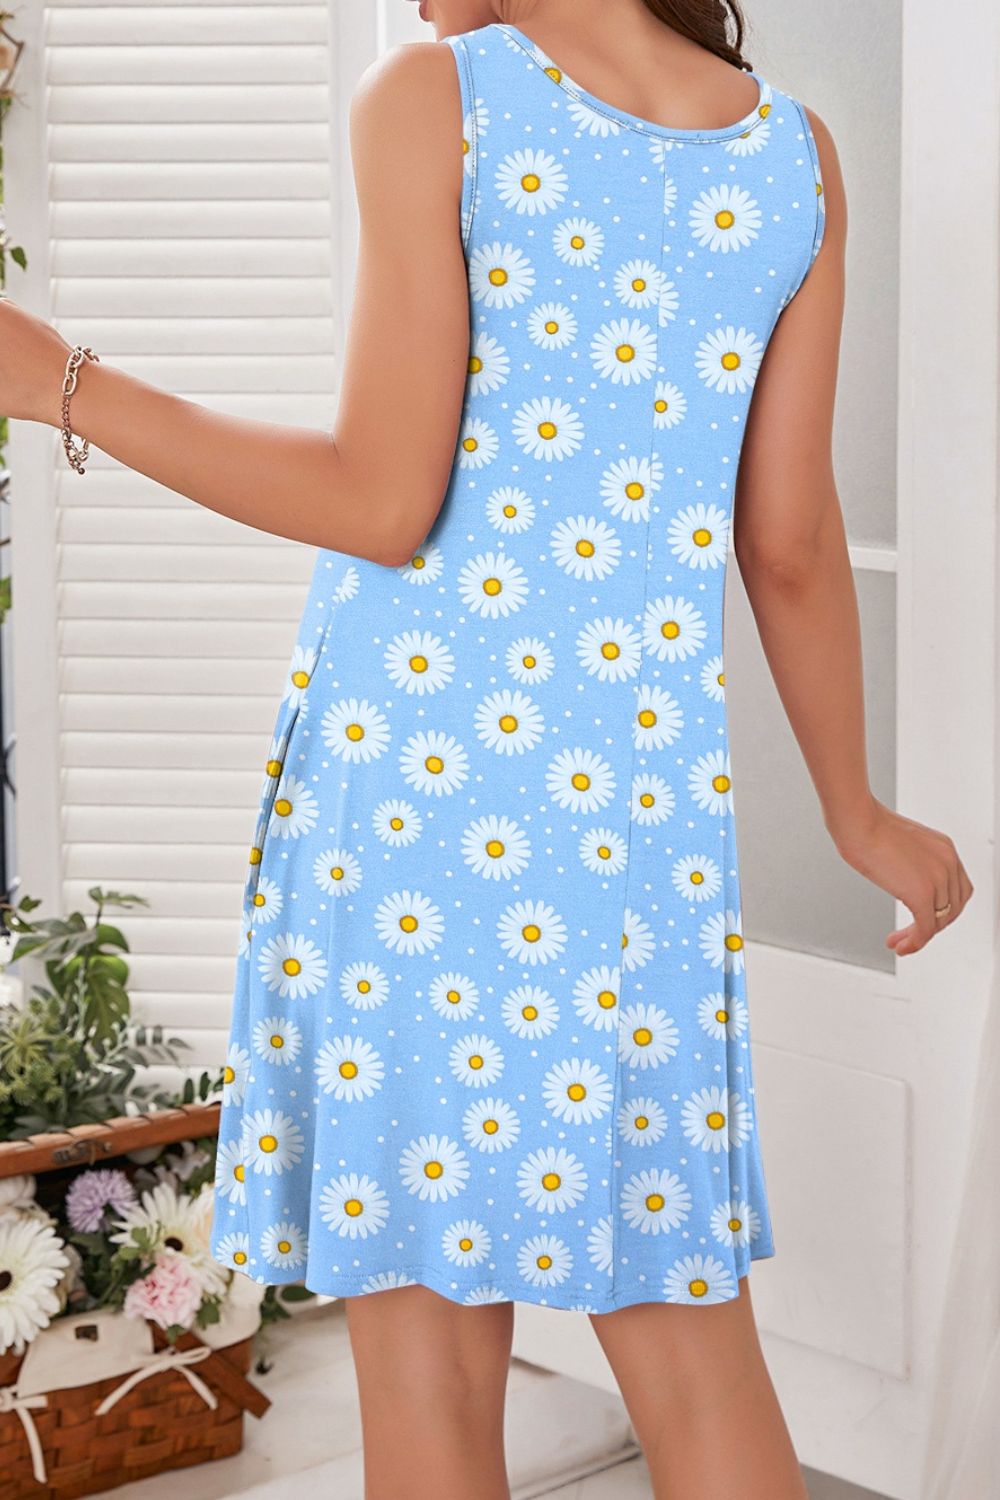 Full Size Printed Round Neck Sleeveless Dress